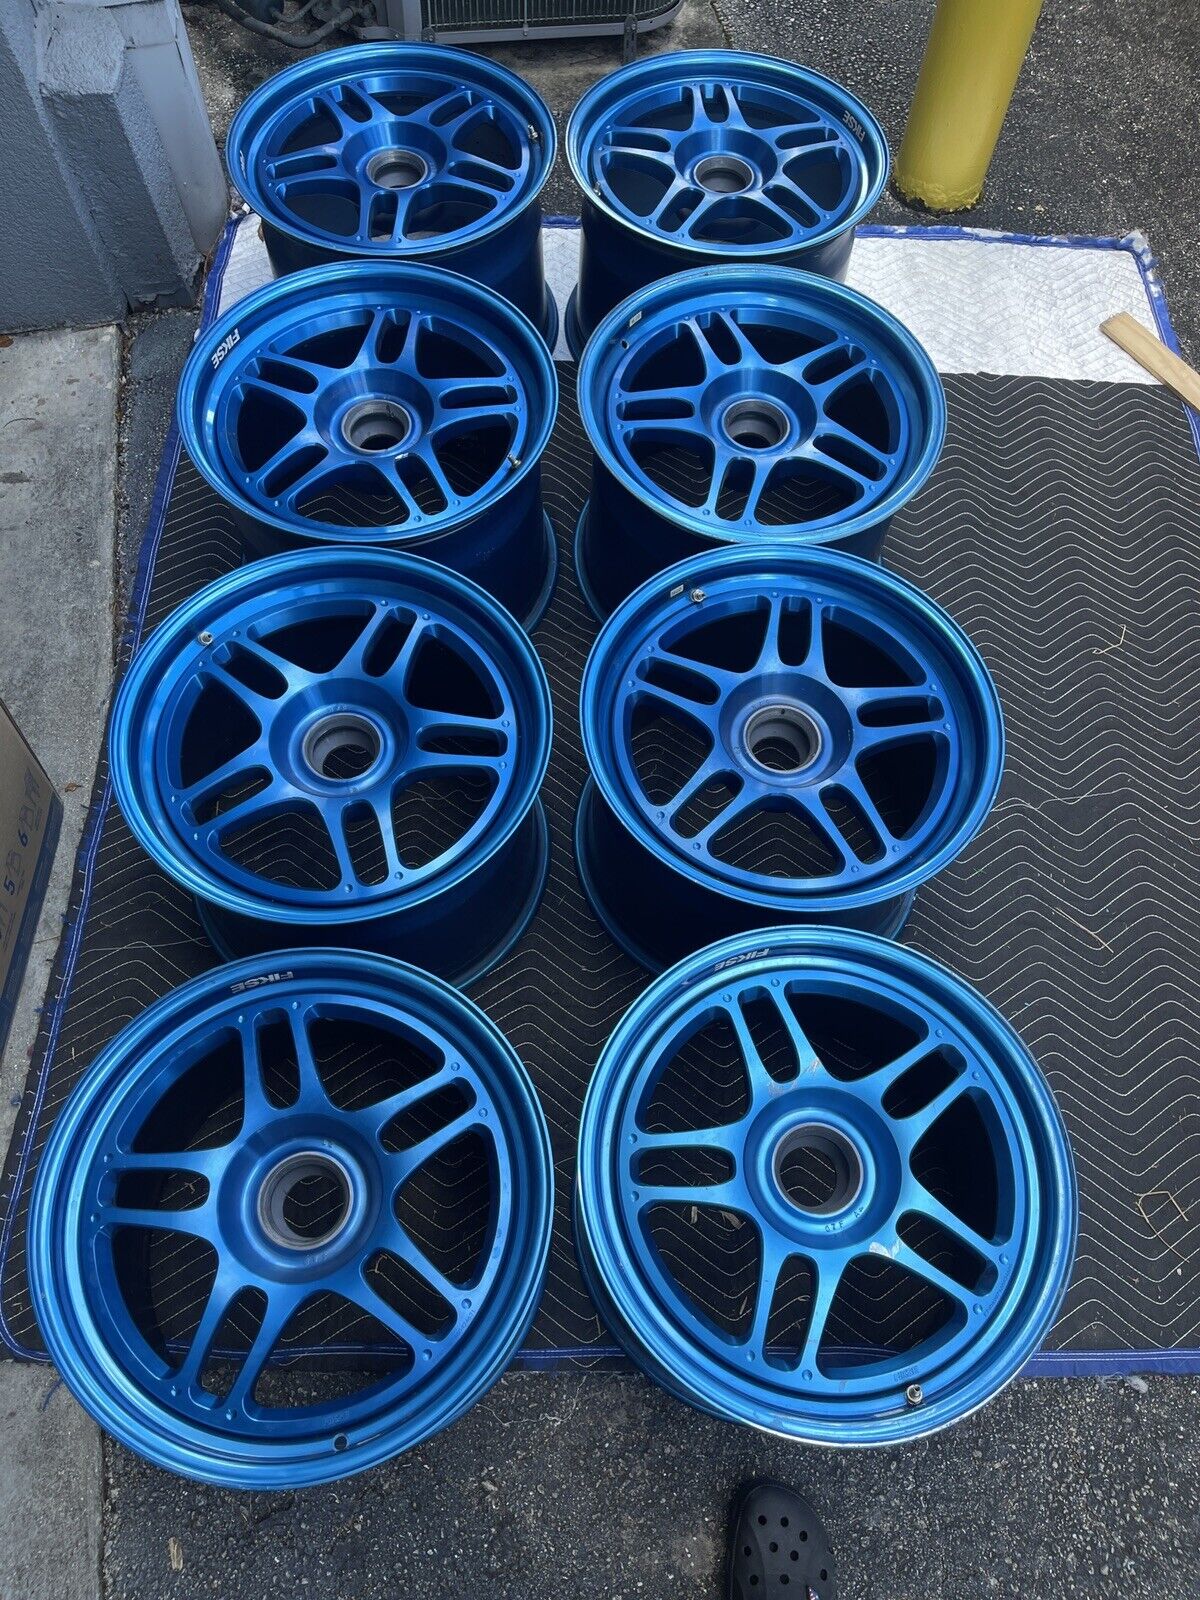 18” Fikse Centerlock Wheels (8) BLUE 18x12.5 18x13 3 Piece Billet Racing Rims